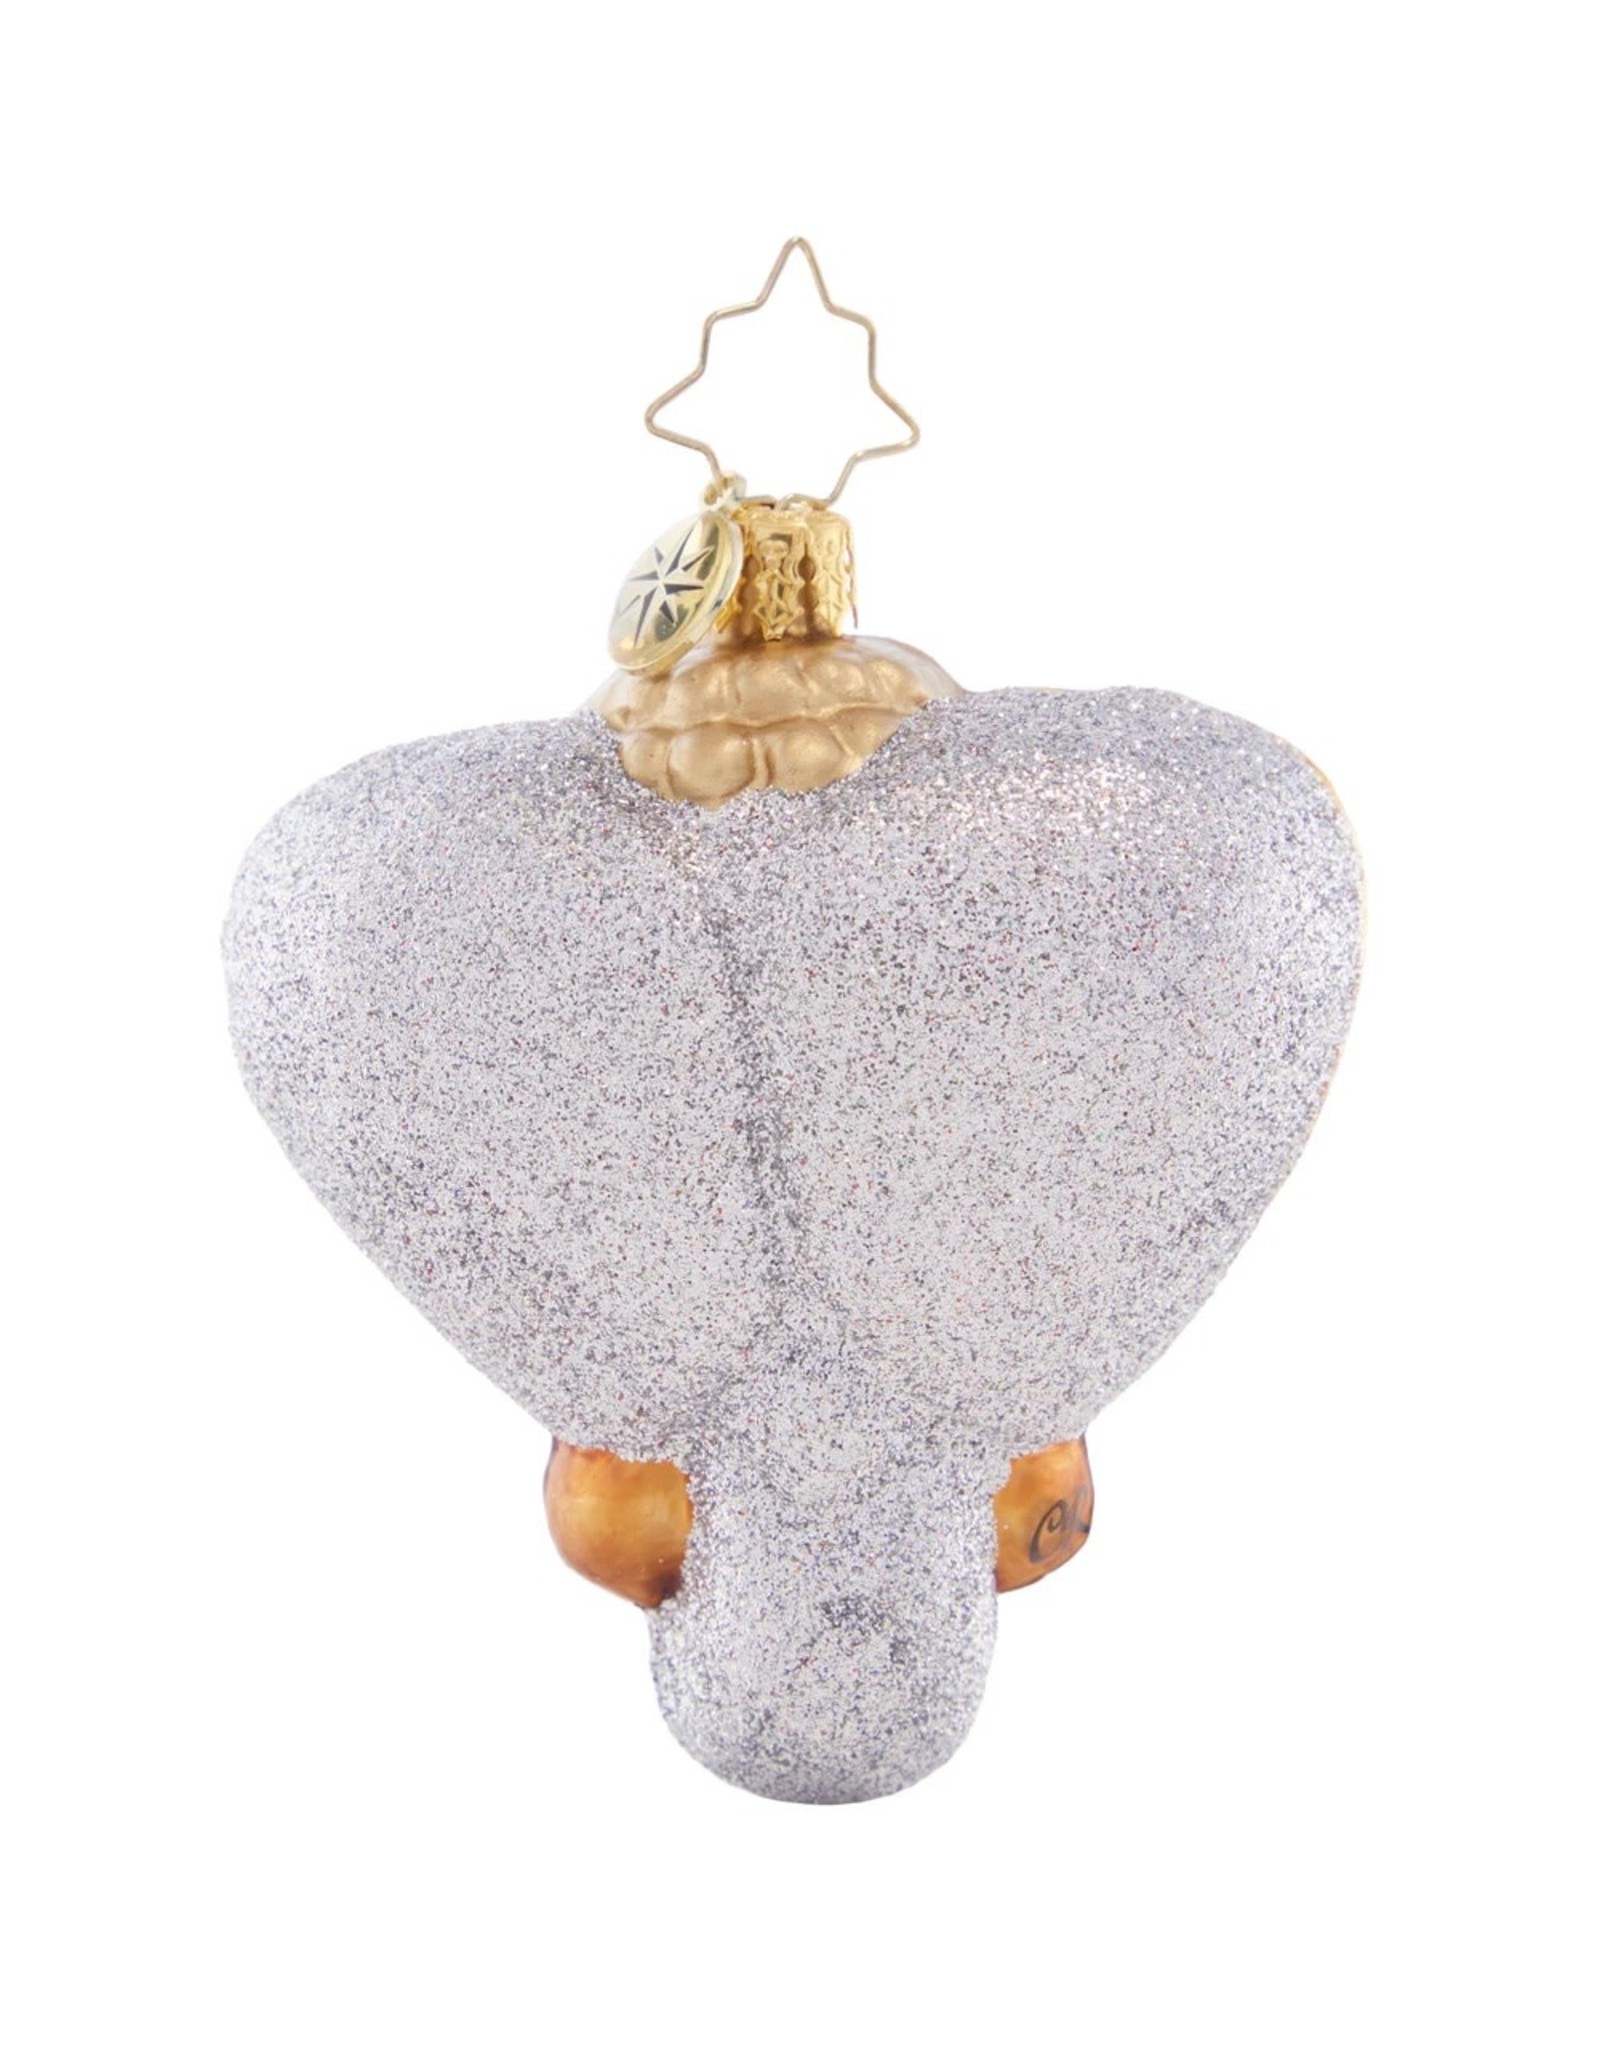 Christopher Radko Opulent Elephant Gem Christmas Ornament